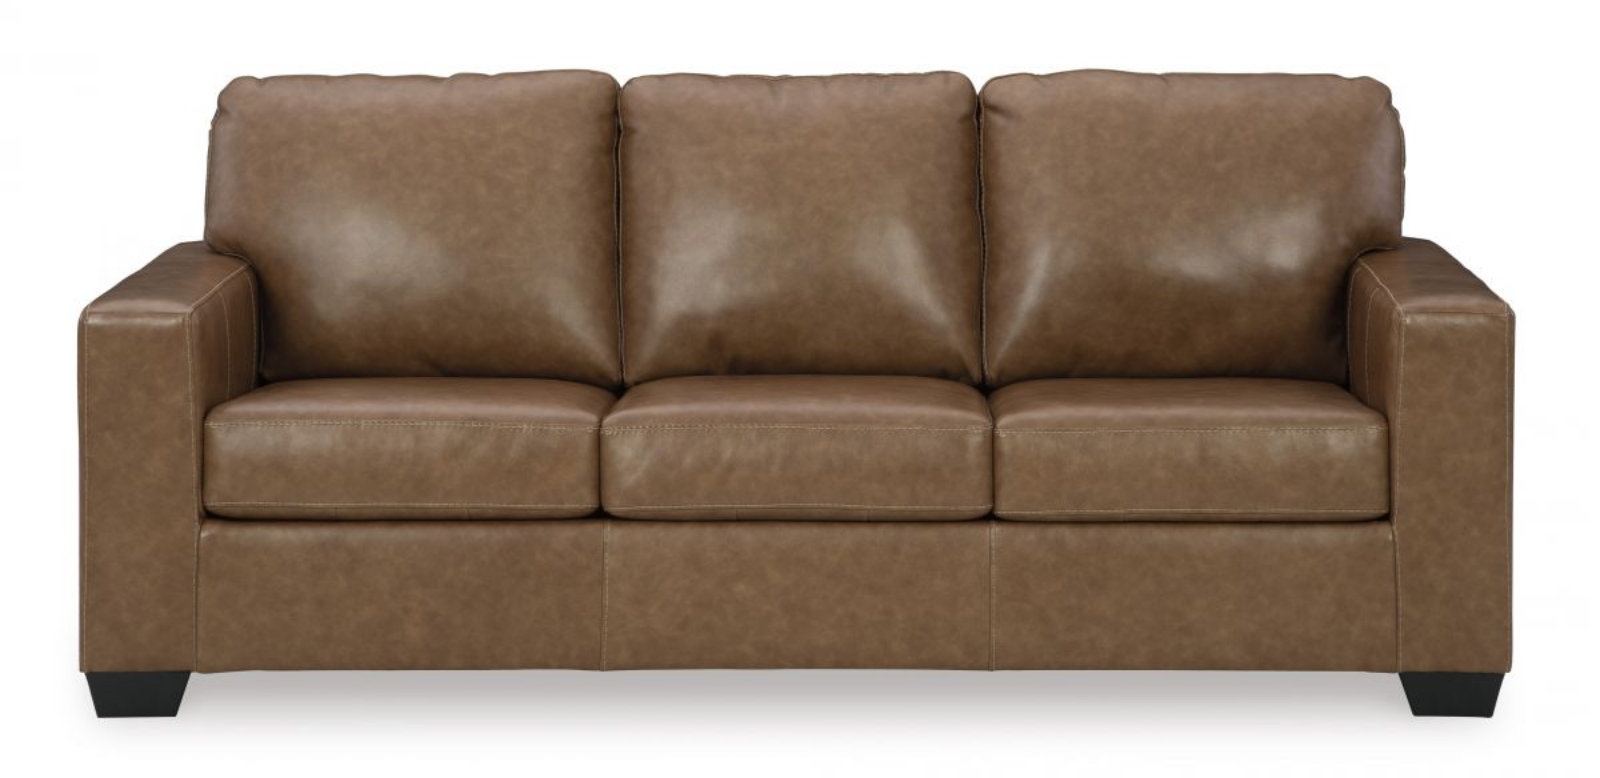 Picture of Bolsena Sofa